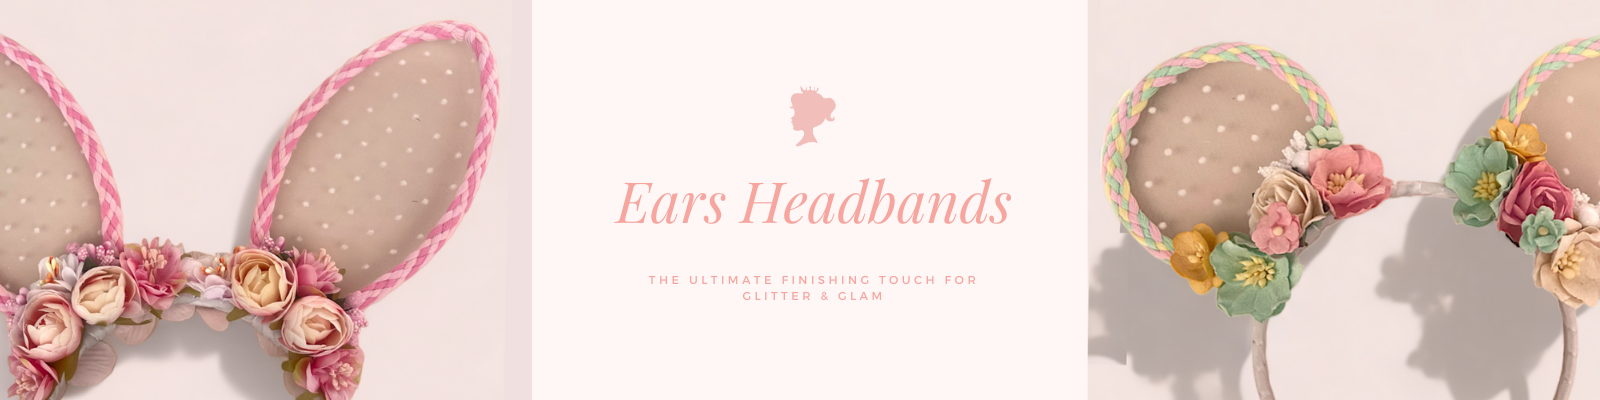 Best Luxury Kids Ears Headbands - handmade by Sienna Likes to Party